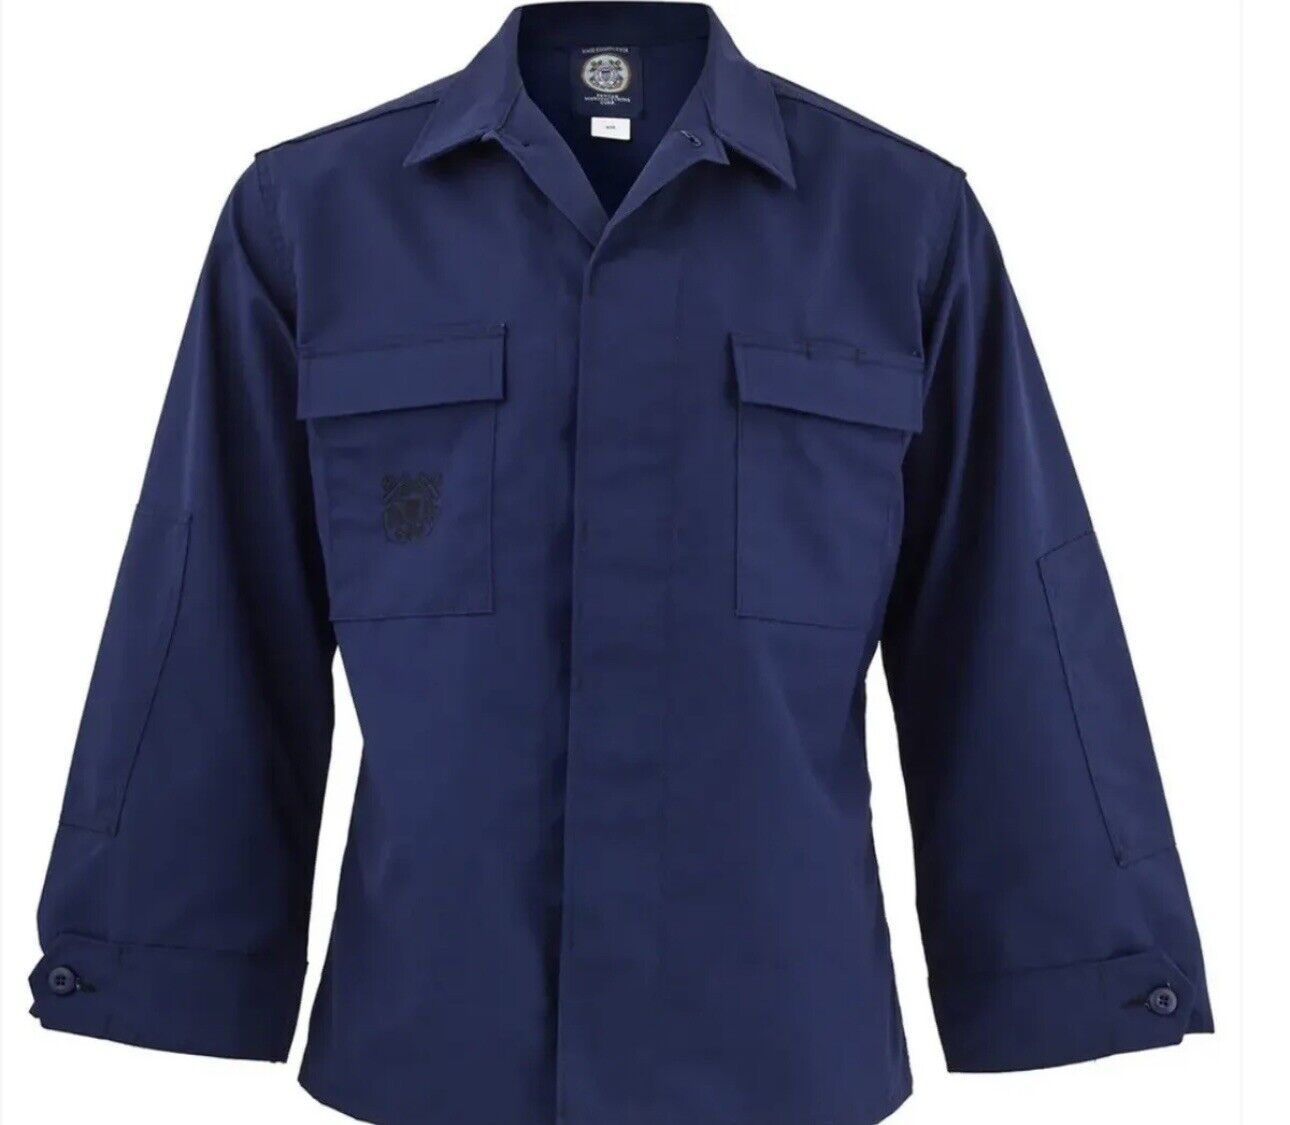 United States Coast Guard Uniform Shirt Different Available Sizes